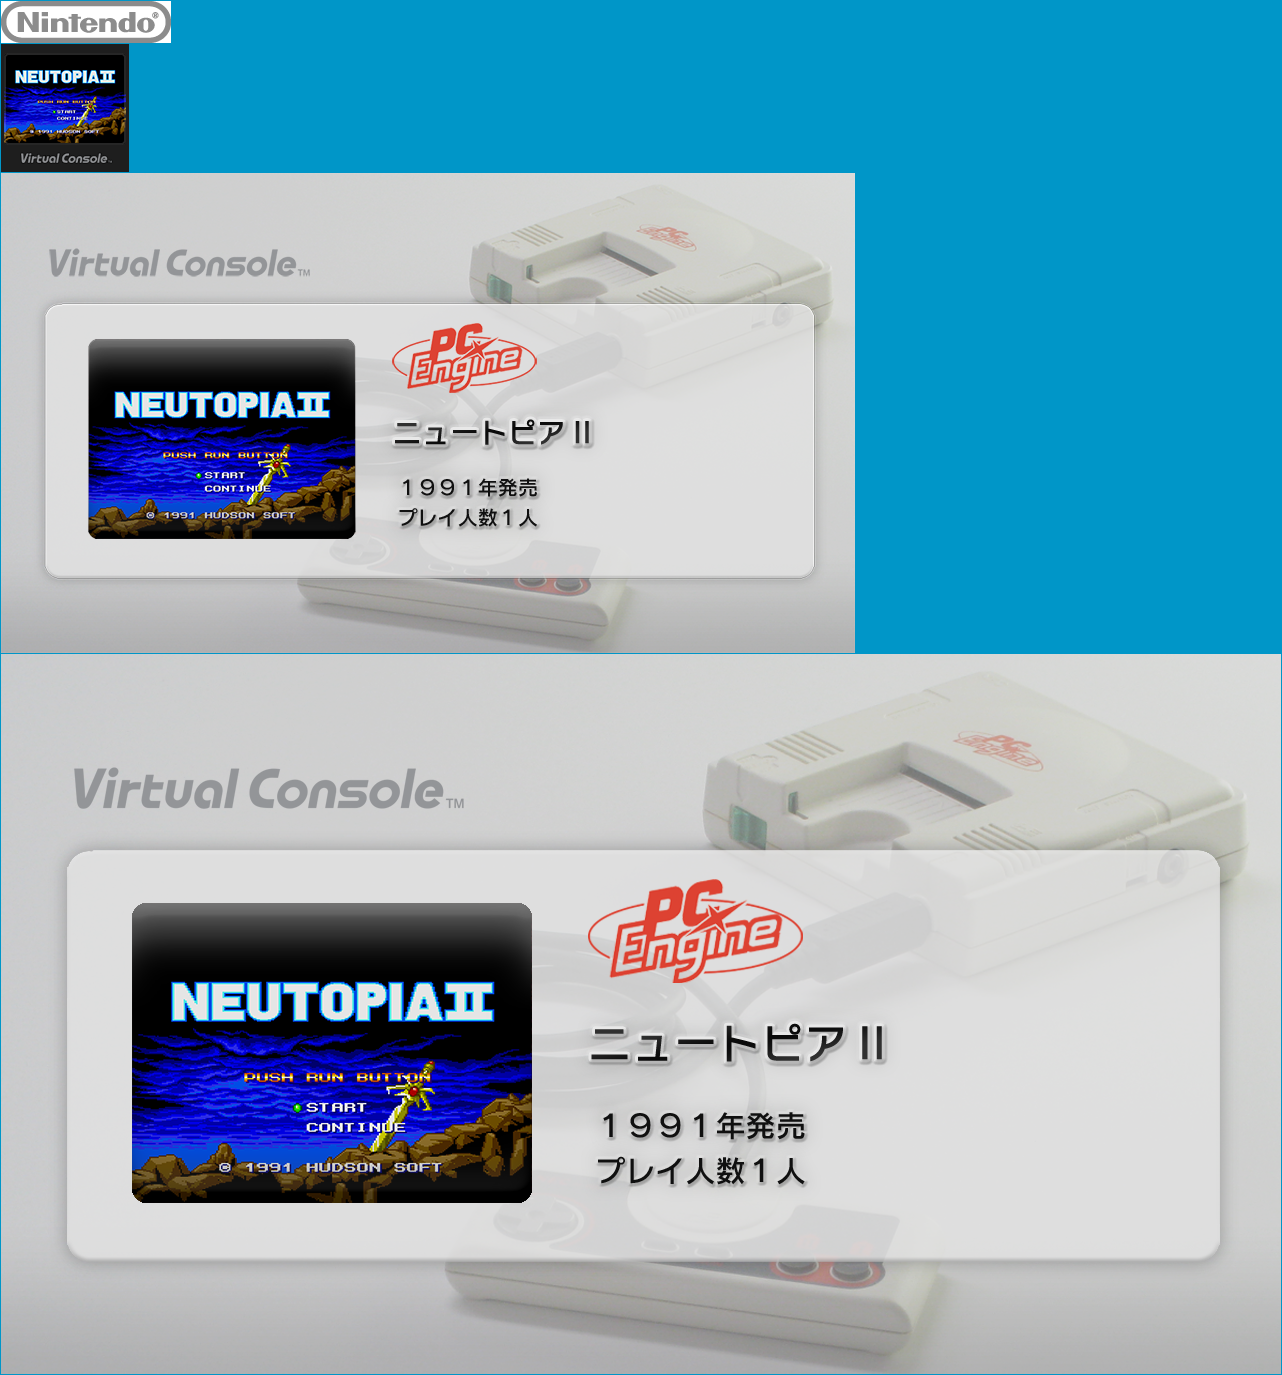 Virtual Console - Neutopia II